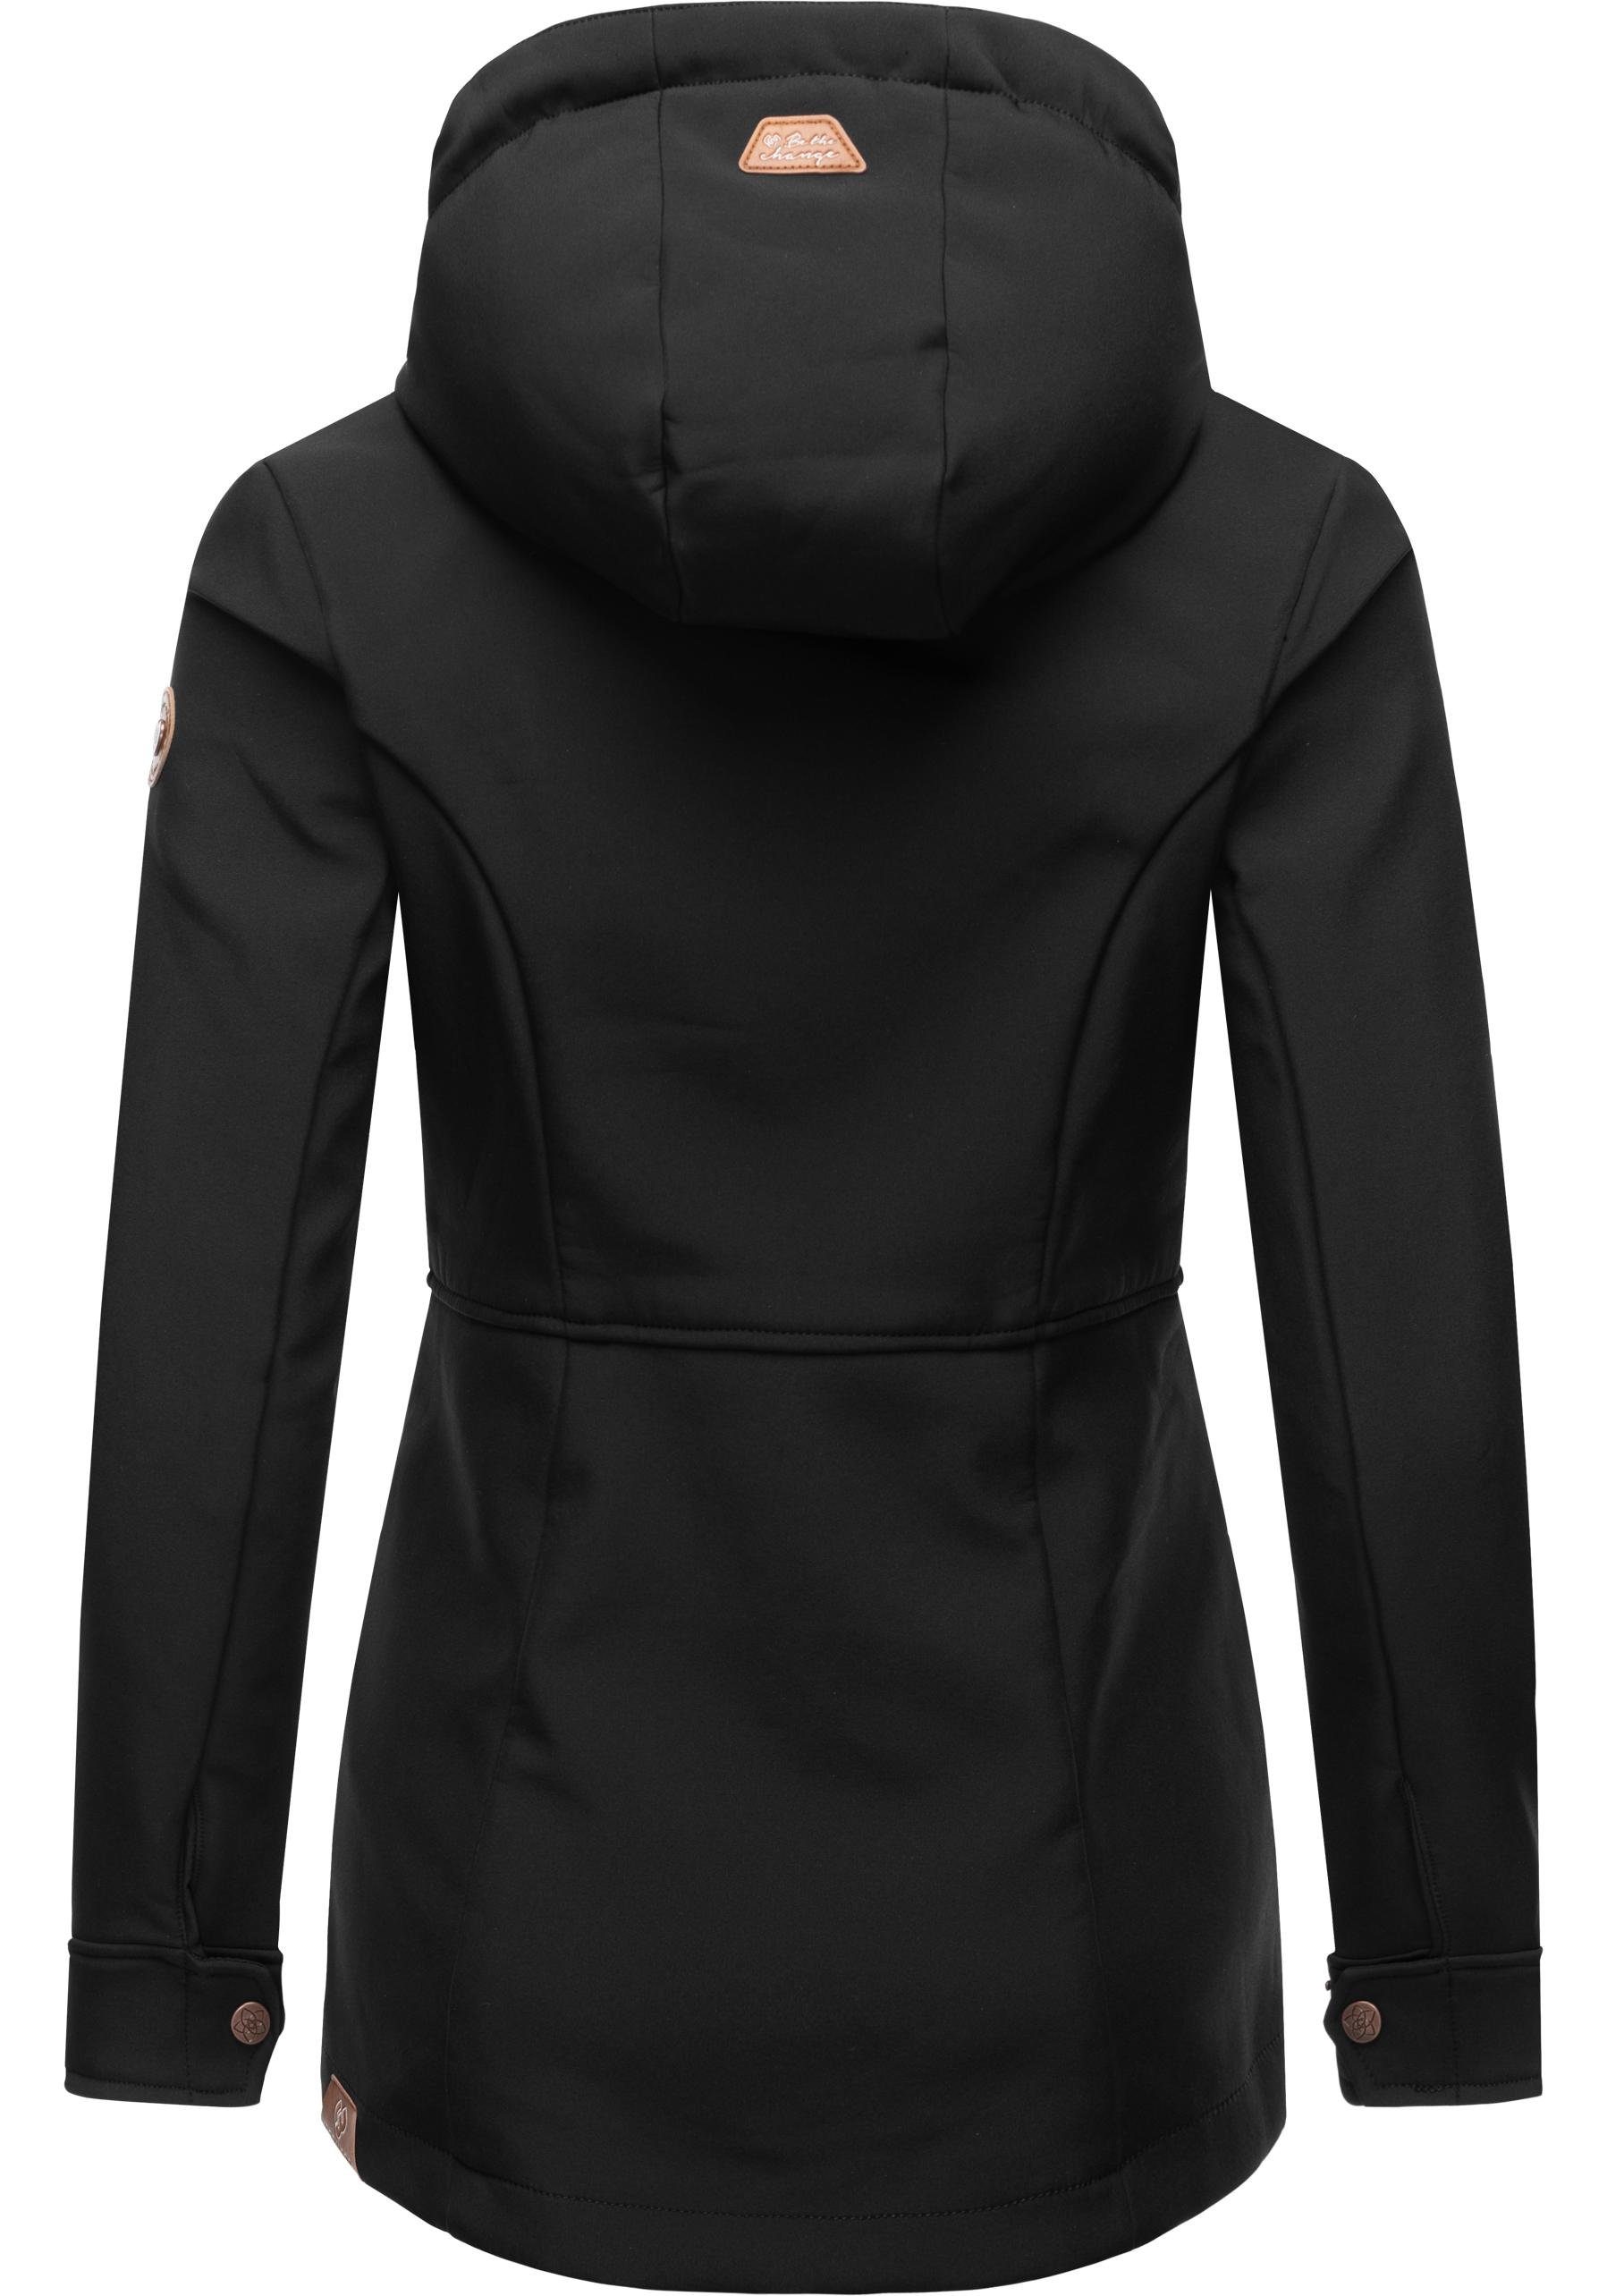 Yba Softshelljacke schwarz mit Kapuze sportliche Ragwear Outdoorjacke Damen